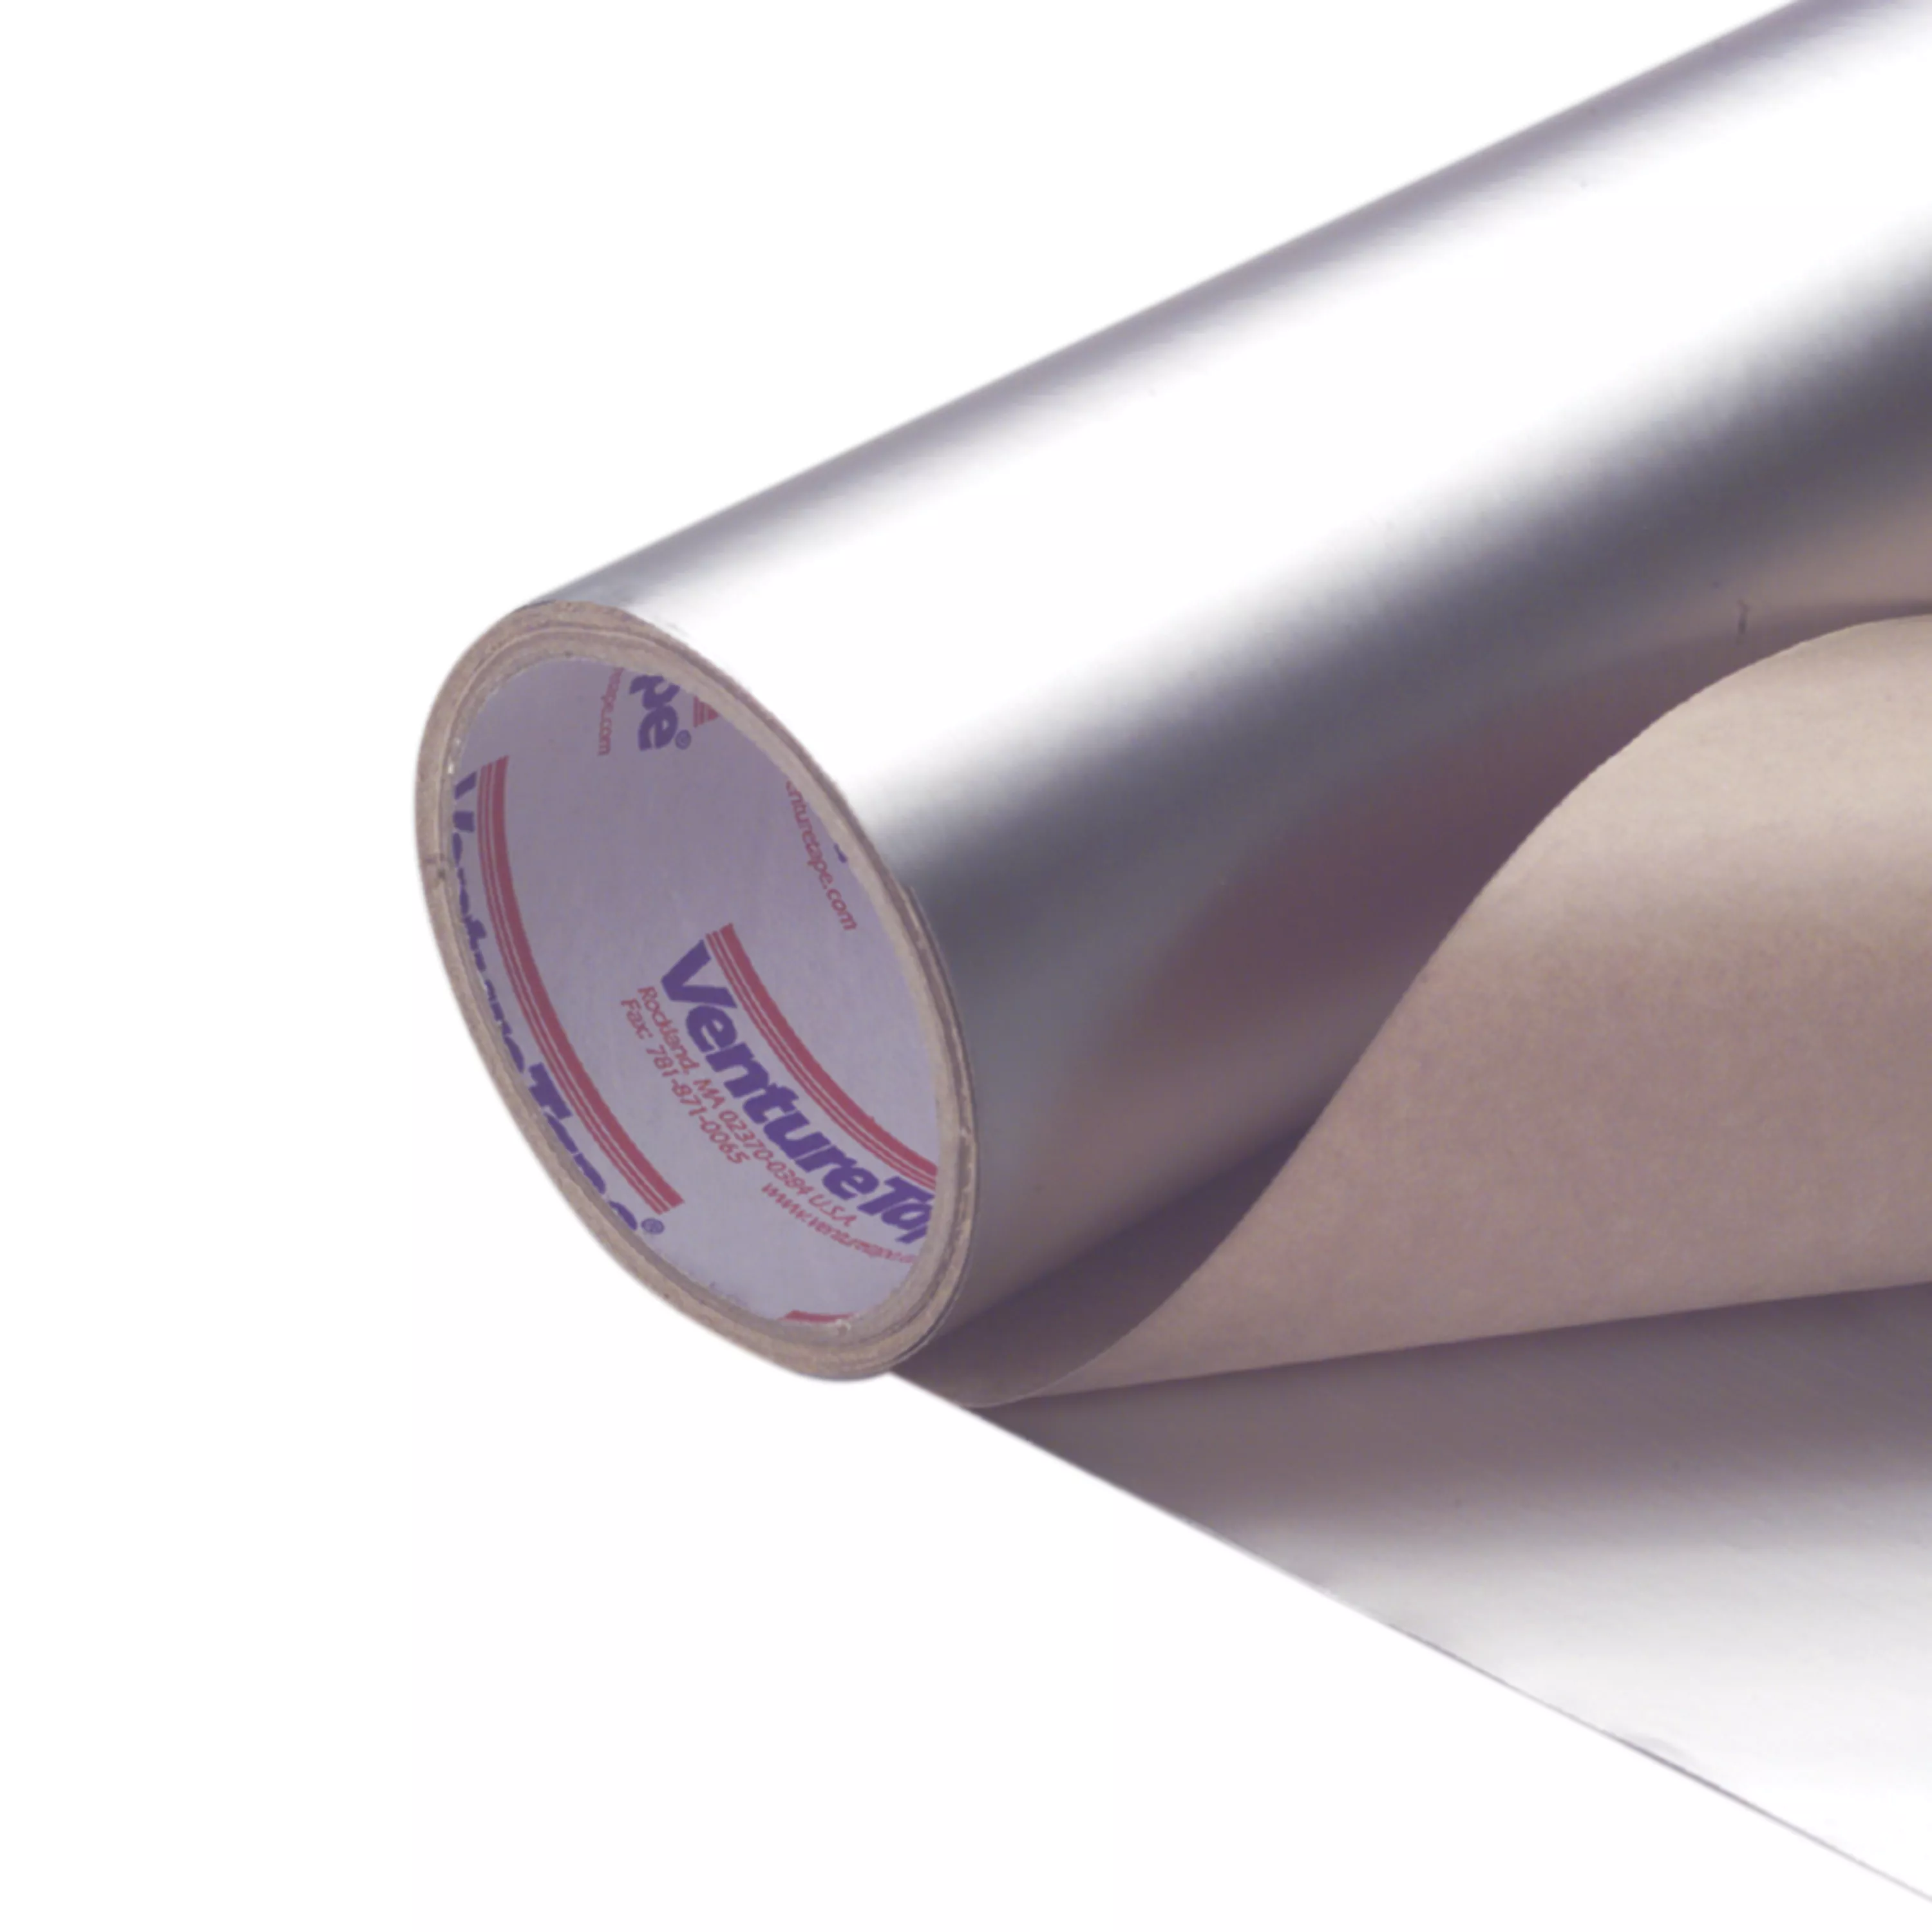 3M™ VentureClad™ Insulation Jacketing Tape 1577CW-E, Silver, 46 in x 50
yd, 1 Roll/Case